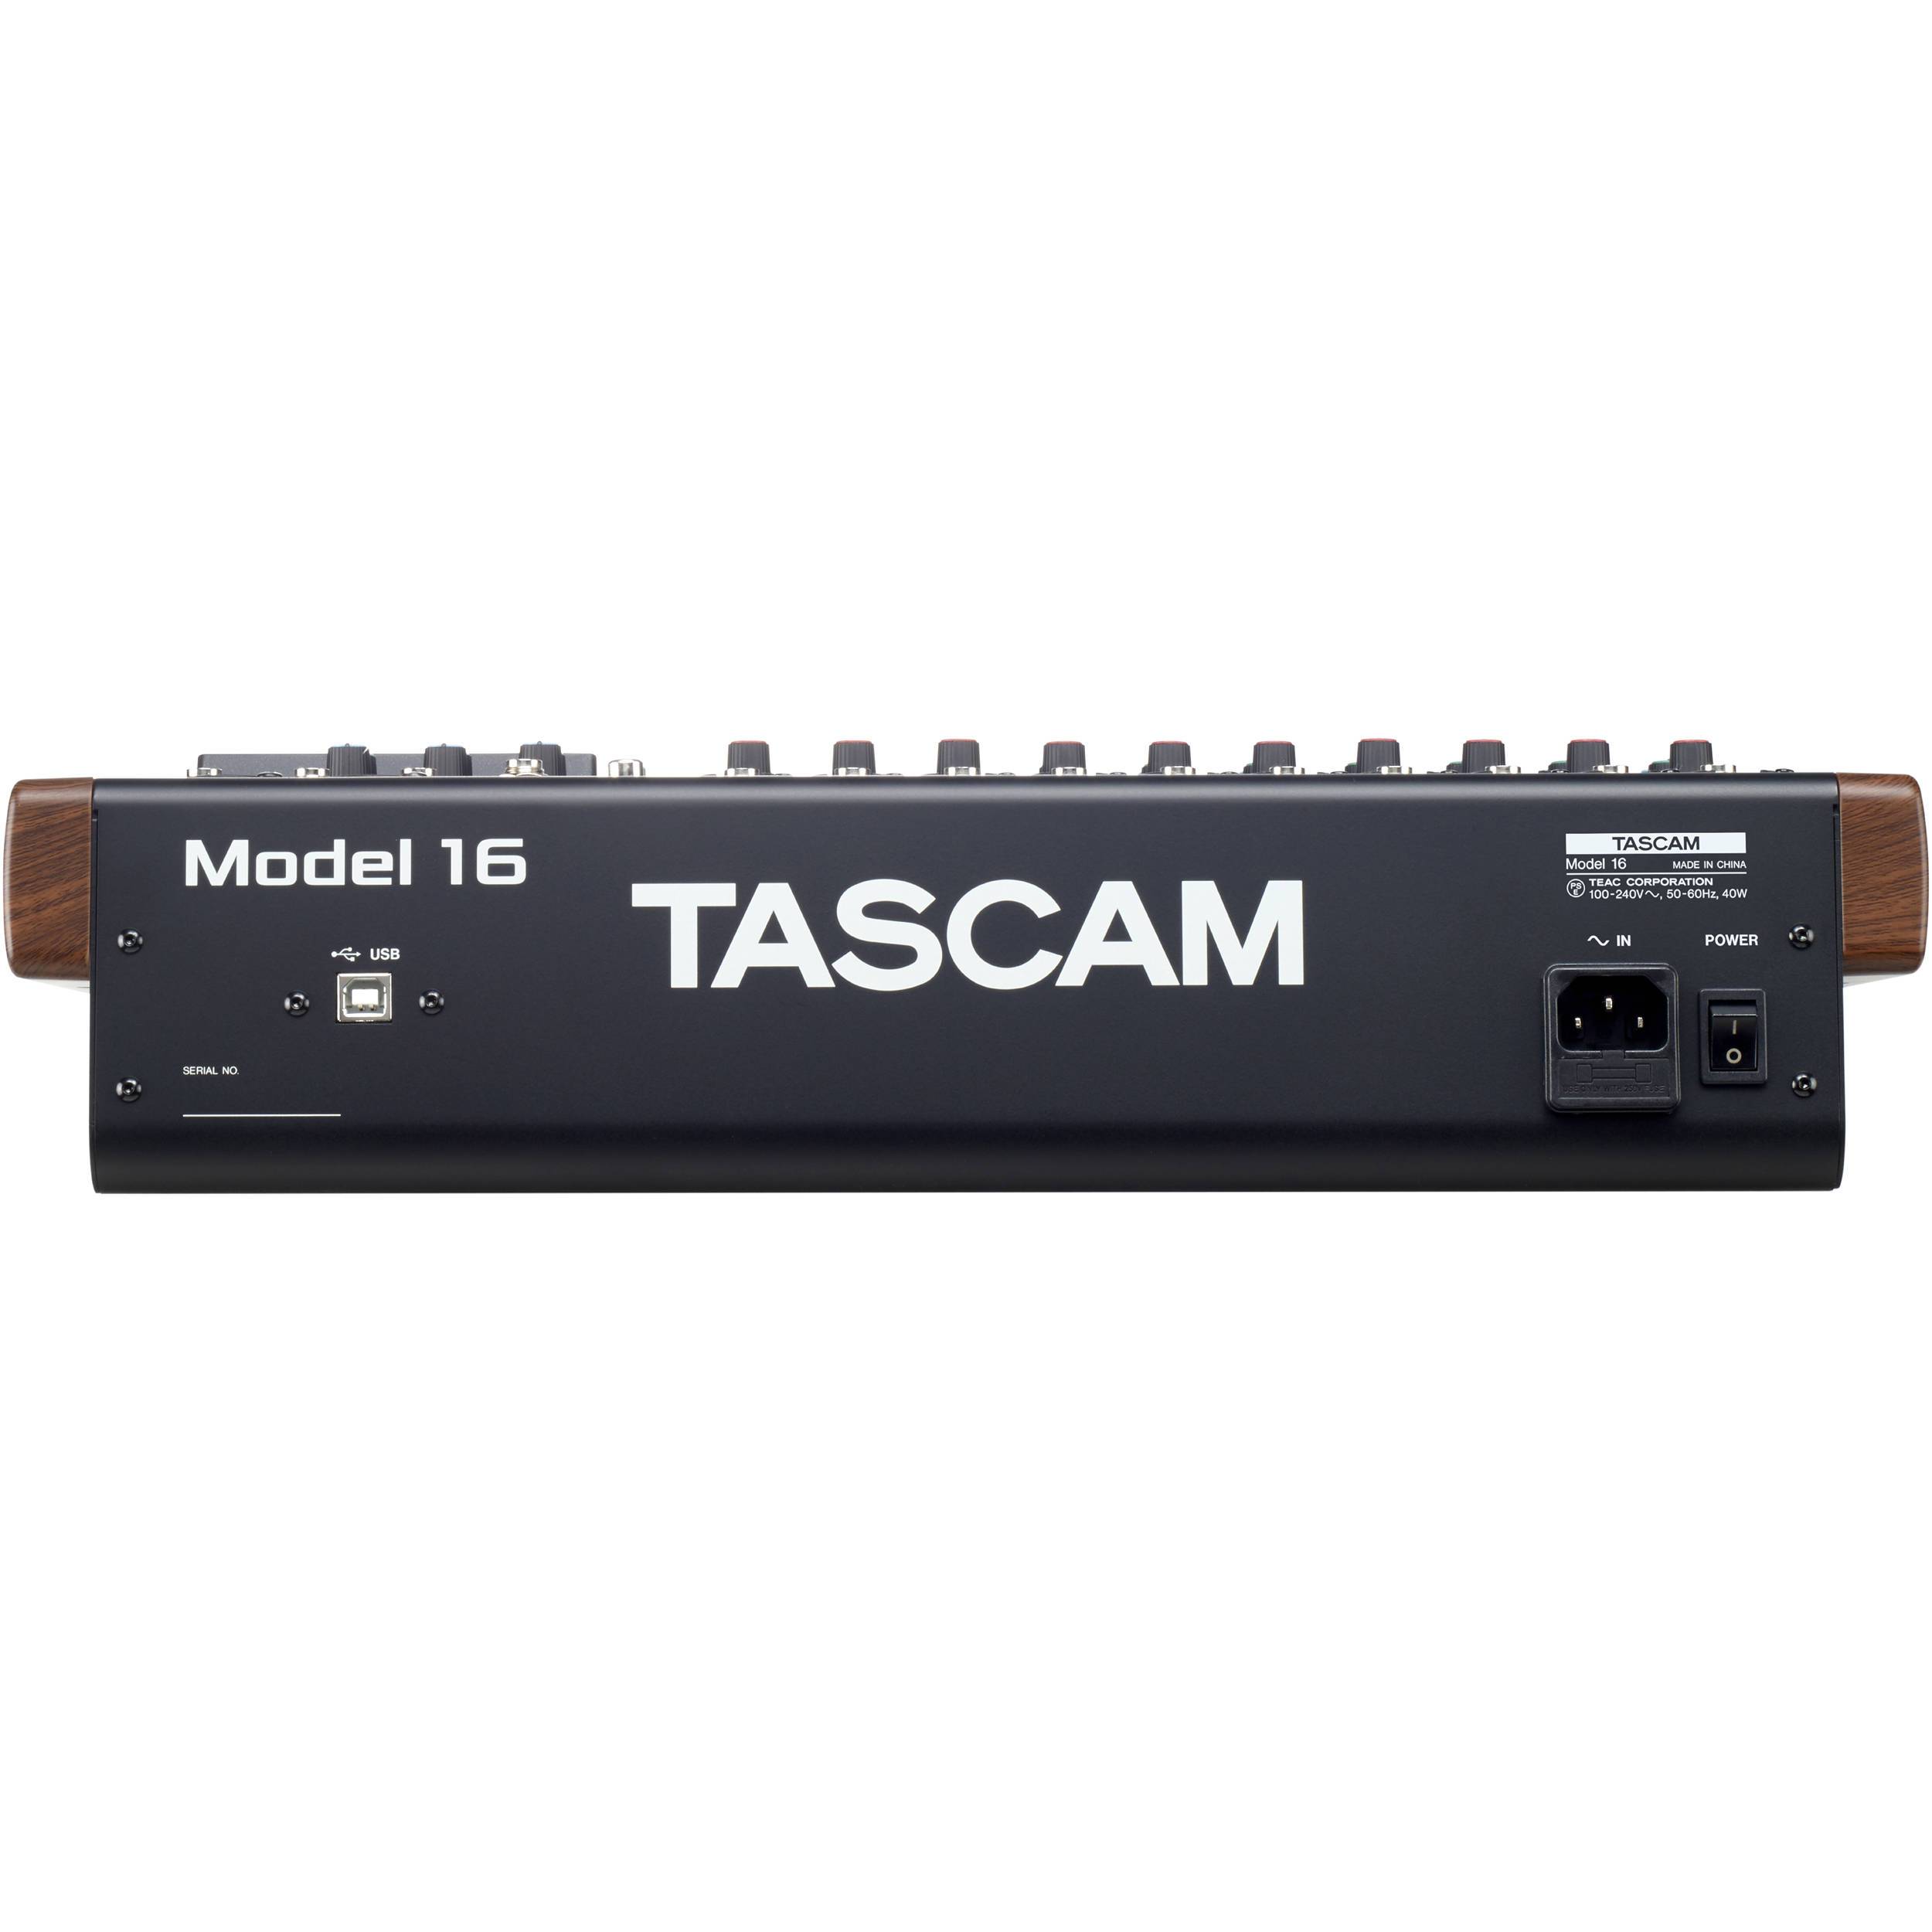 Tascam Model 16 Mixer / Interfaz USB / Grabador de 16 Canales Mixers/Consolas TASCAM 